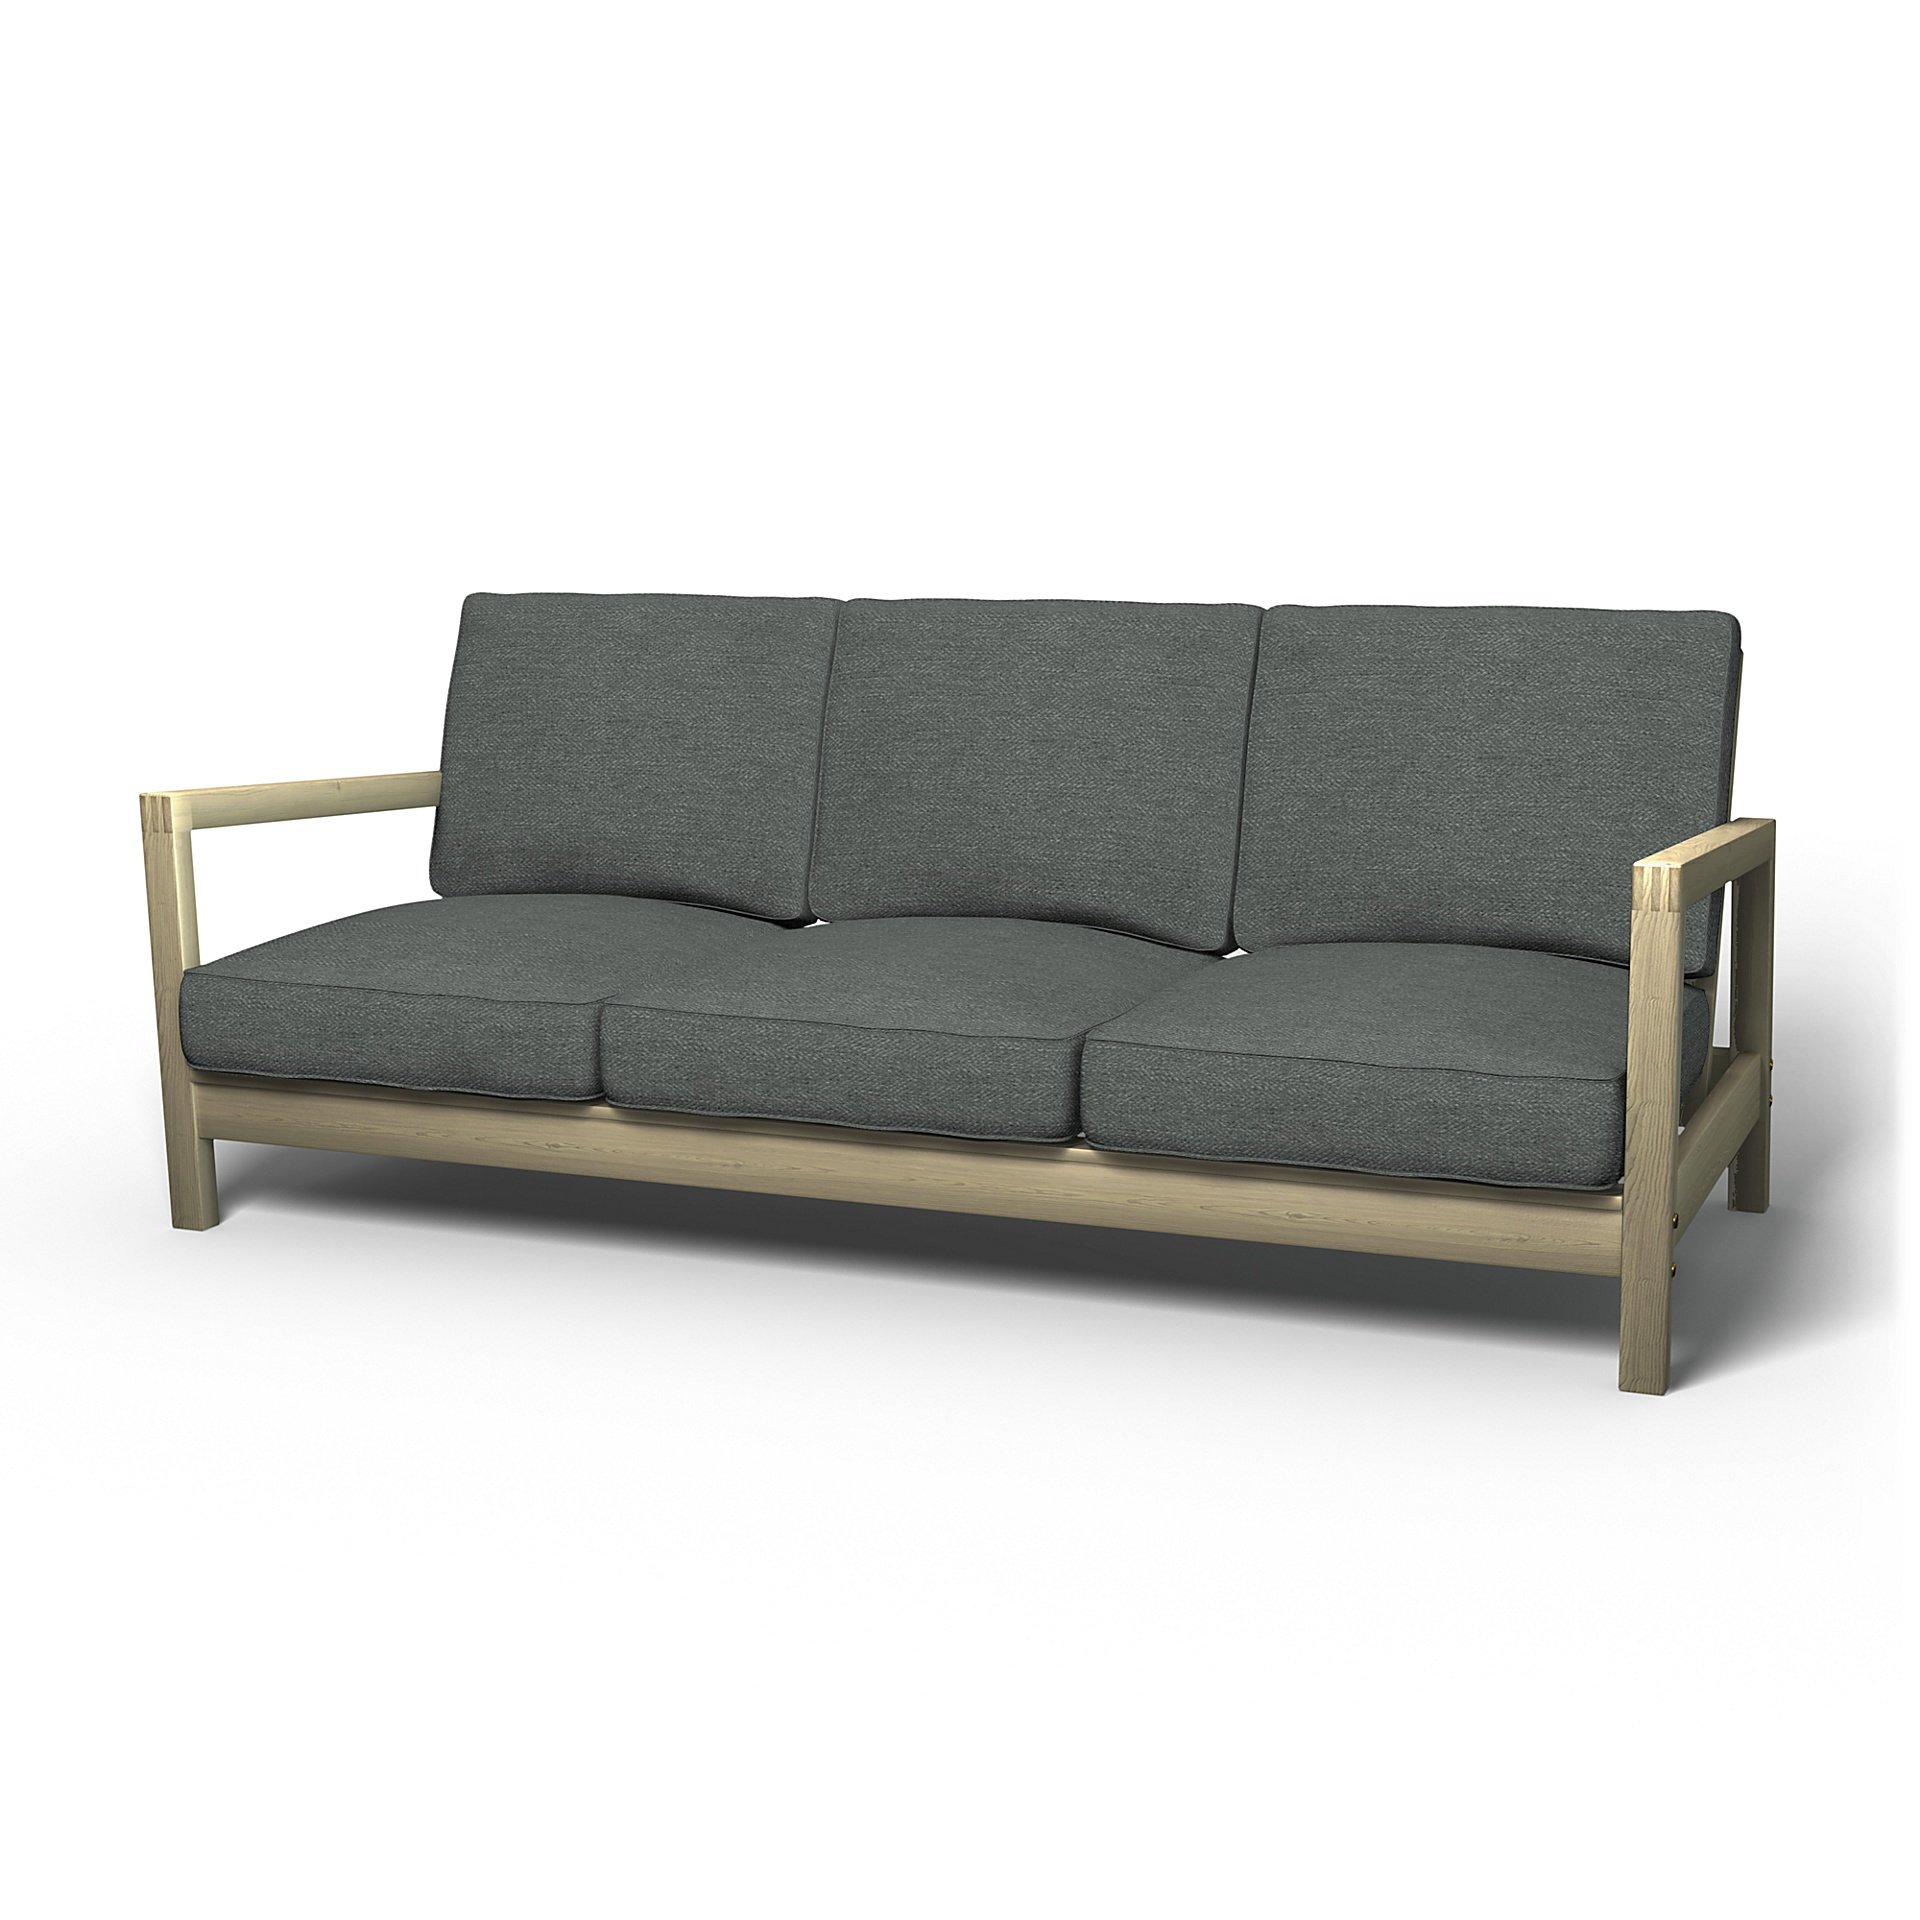 IKEA - Lillberg 3 Seater Sofa Cover, Laurel, Boucle & Texture - Bemz